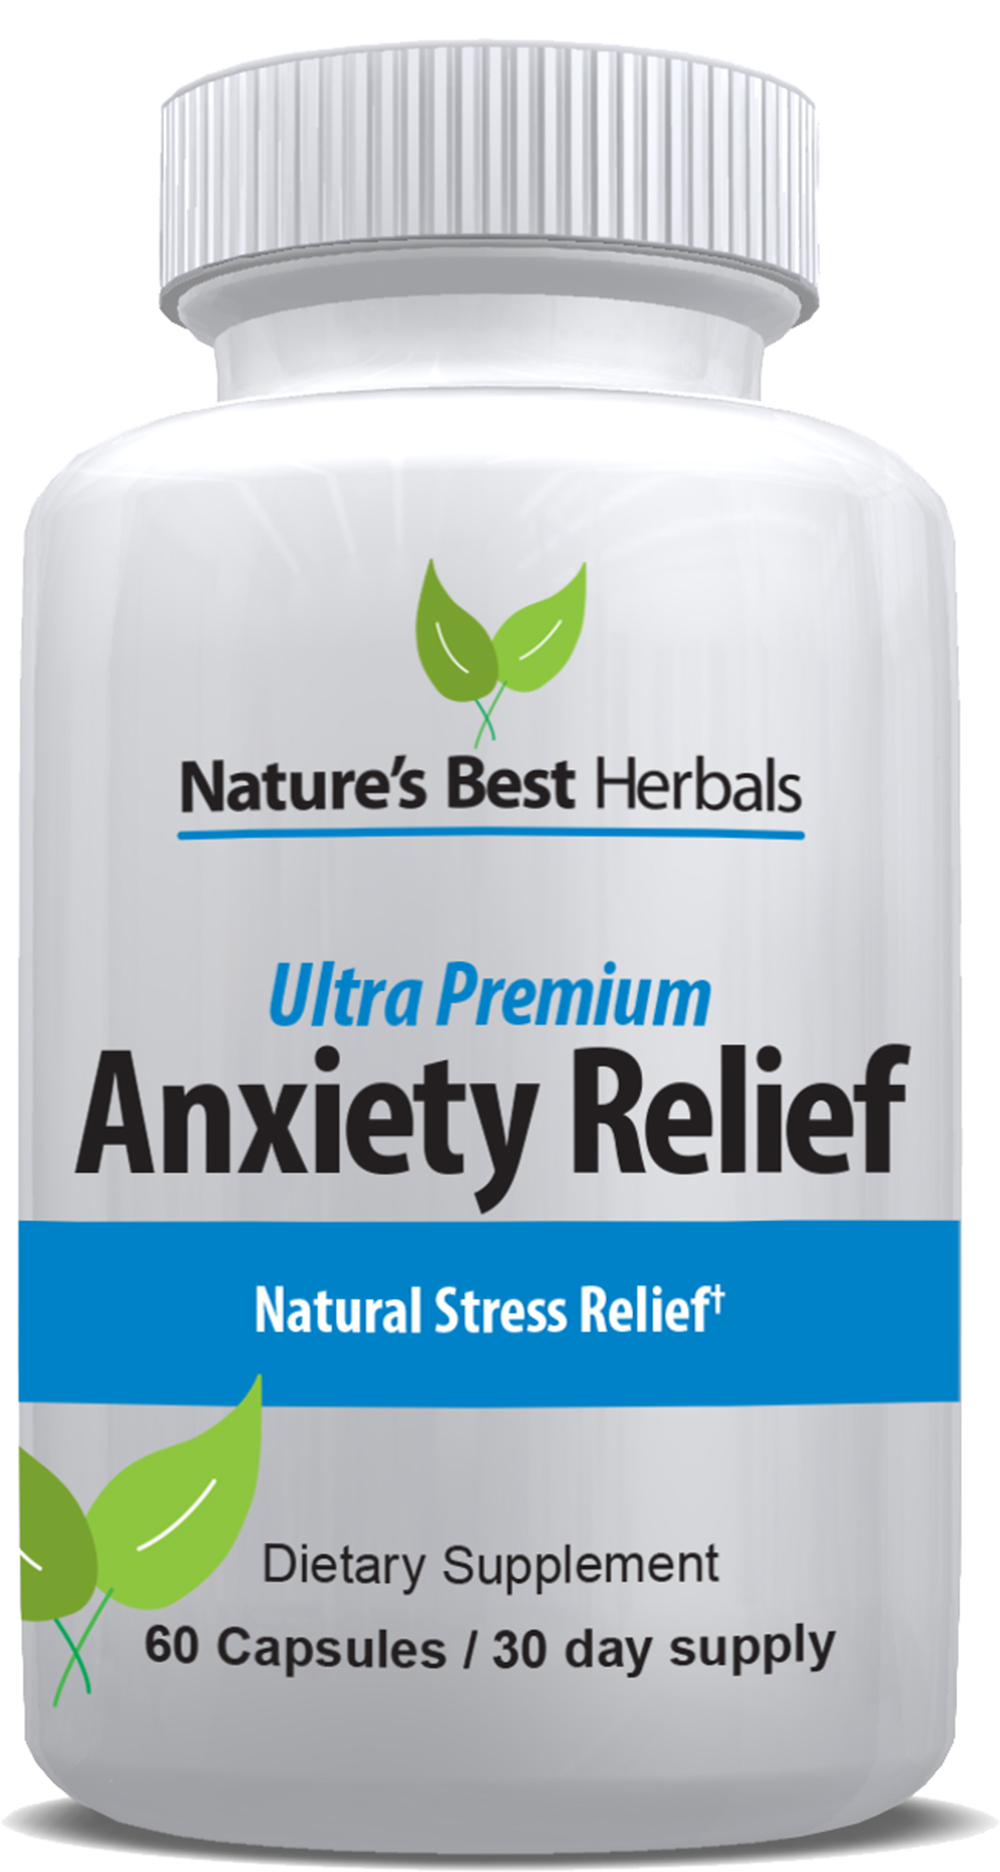 https://naturesbestherbals.com/wp-content/uploads/2020/12/Ultra-Premium-Anxiety-Relief-bottle.jpg